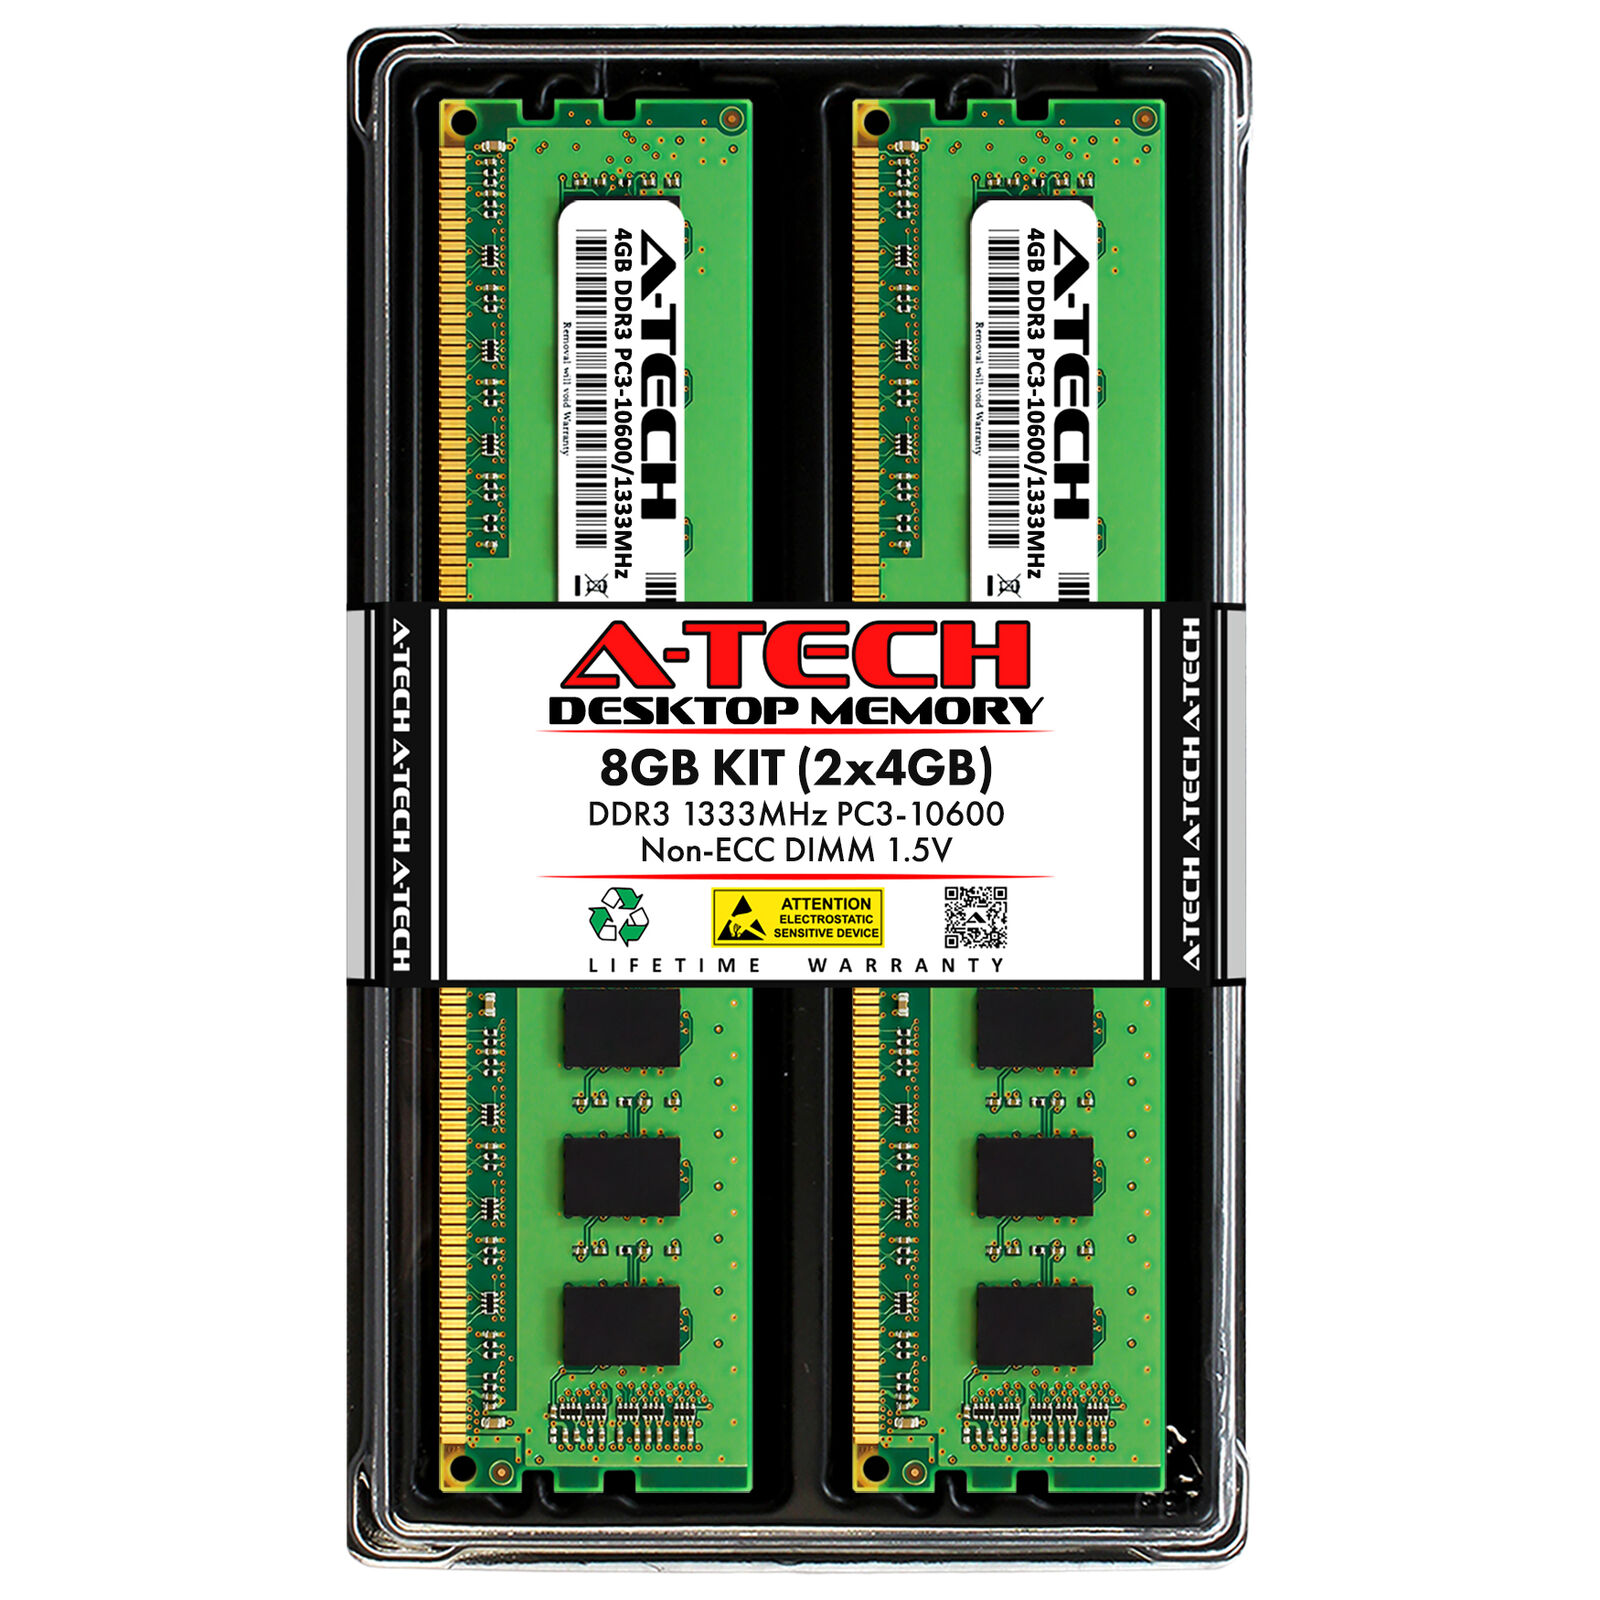 8GB 2x4GB PC3-10600U Dell Inspiron 580s 580 620 One 2205 One 2305 Memory RAM